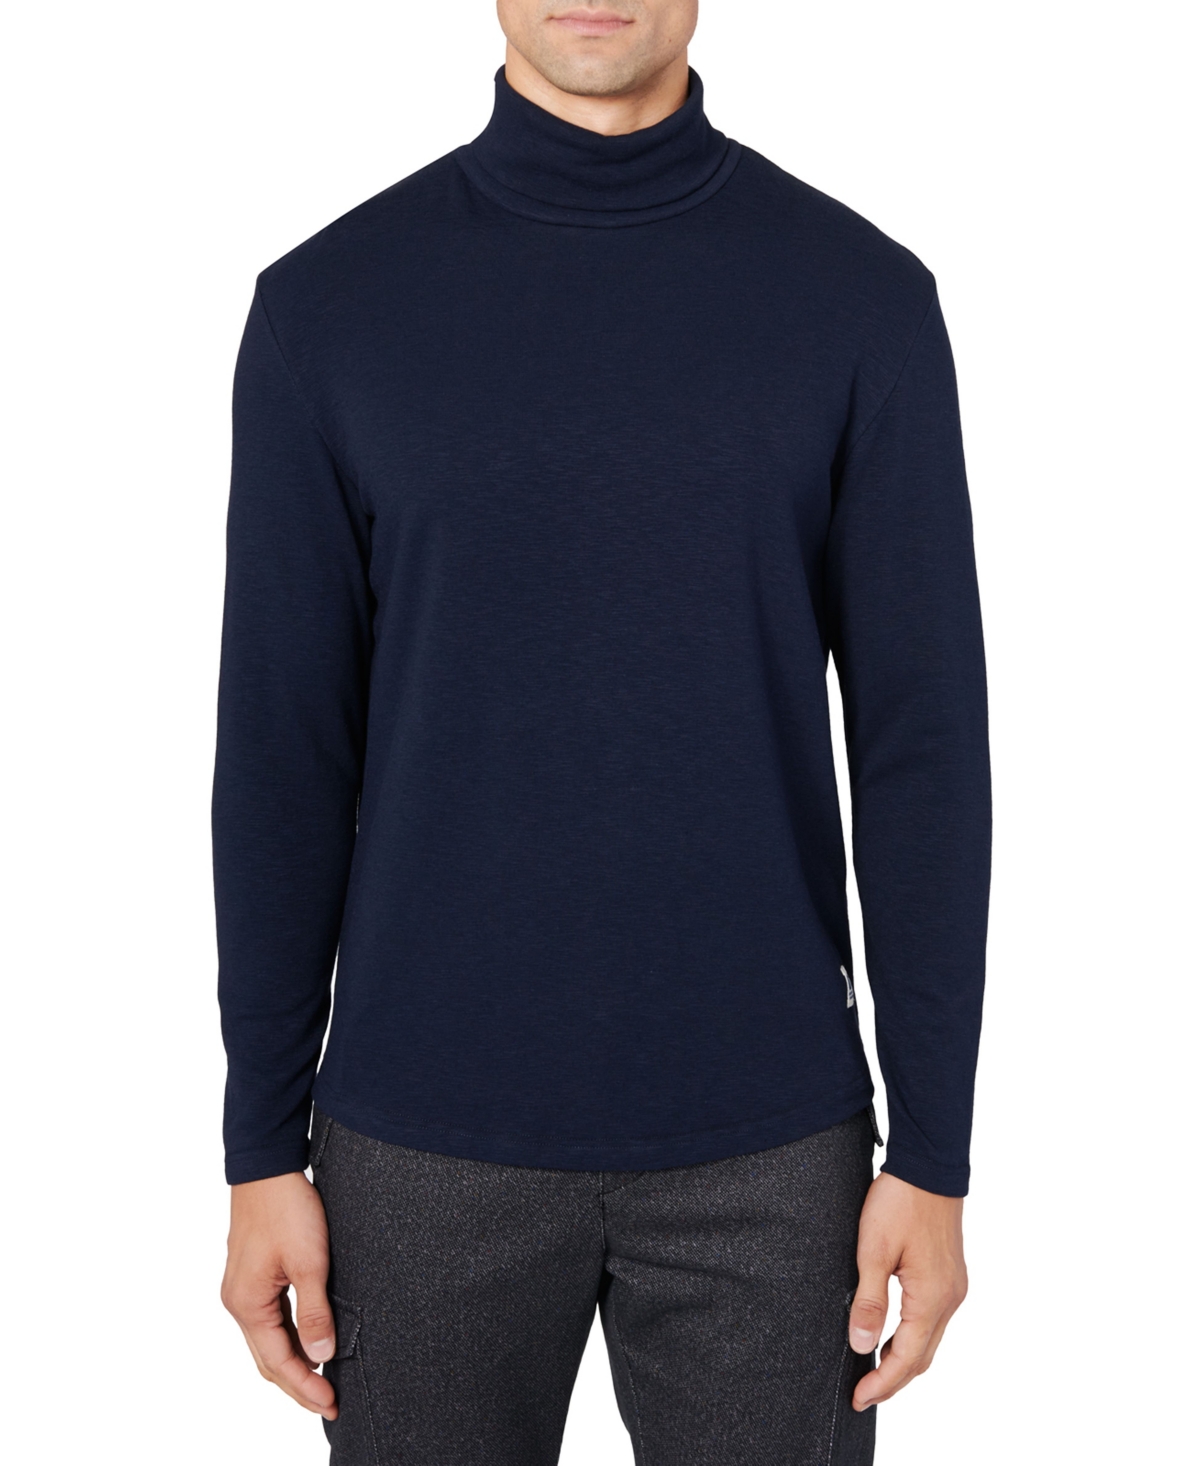 Men's Long Sleeve Turtleneck Sweater - Navy